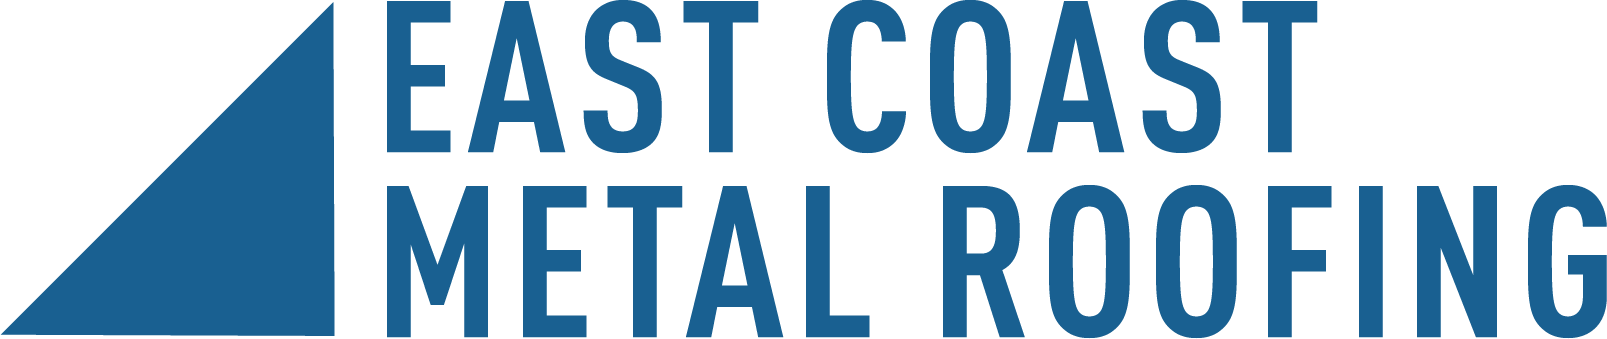 East Coast Metal Roofing, LLC - Connecticut Logo